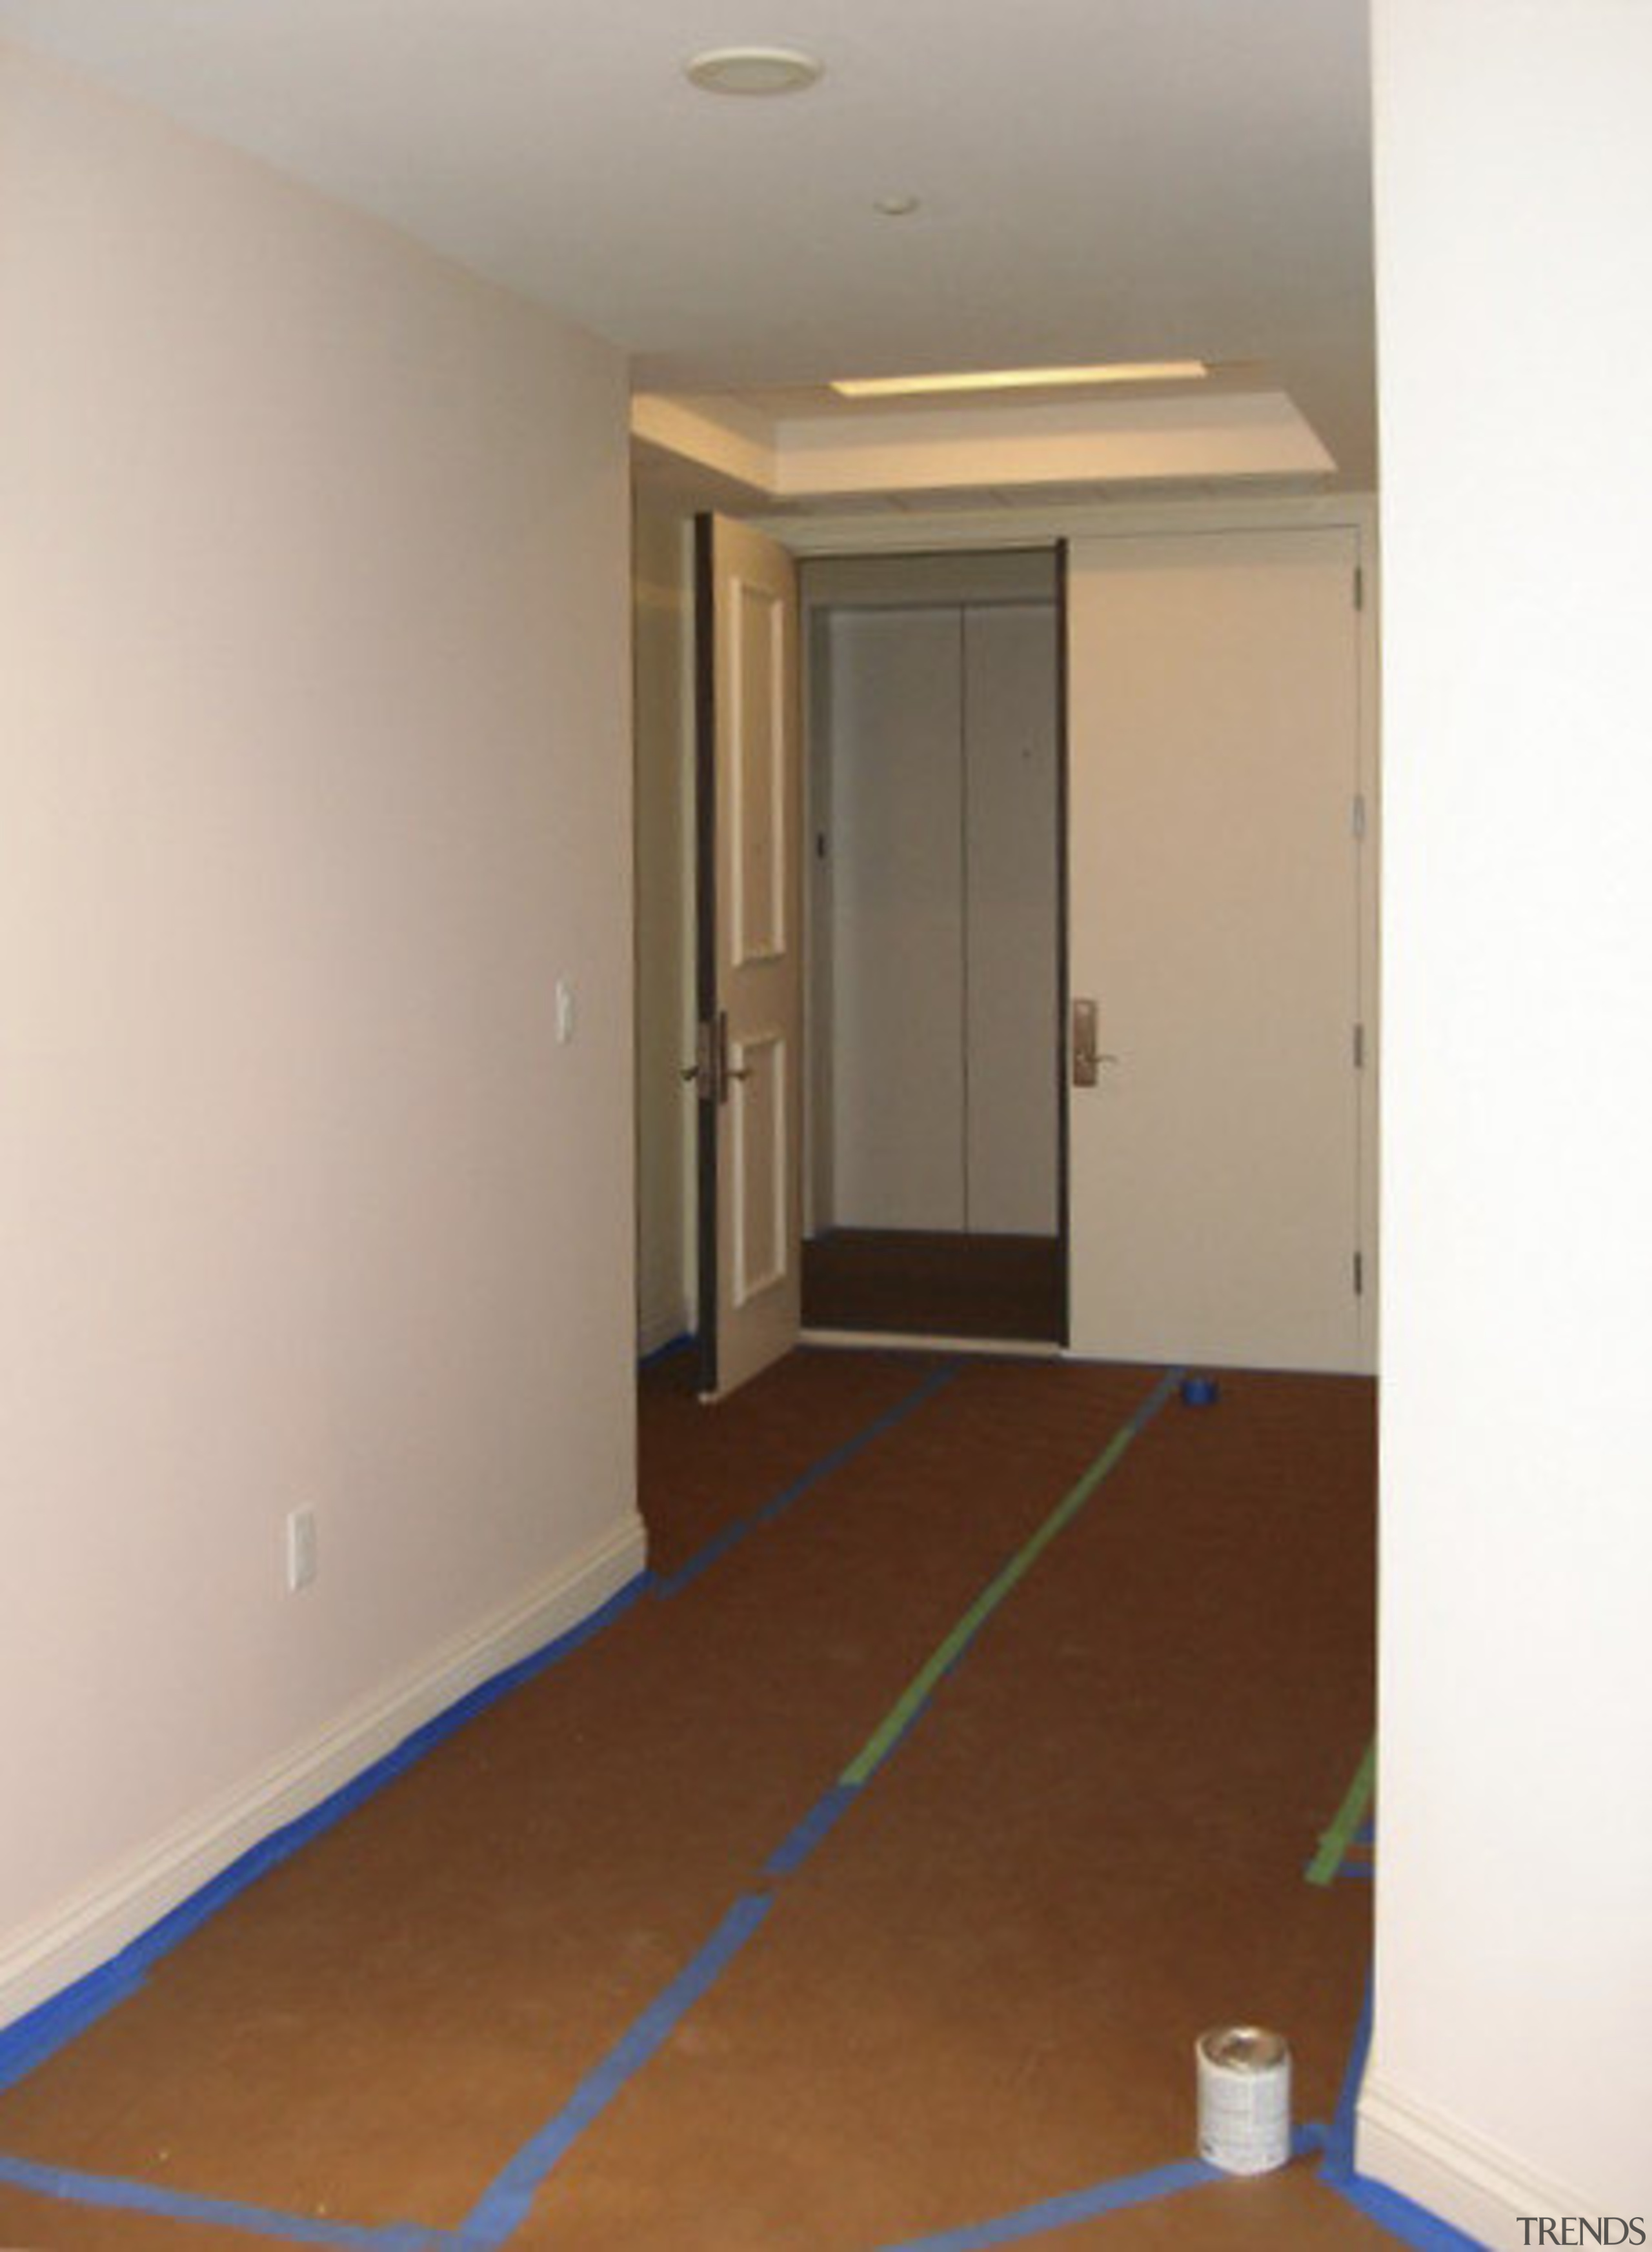 Hallway with door. - Hallway with door. - apartment, ceiling, floor, flooring, hardwood, home, house, interior design, laminate flooring, property, real estate, room, wall, wood, wood flooring, wood stain, gray, brown